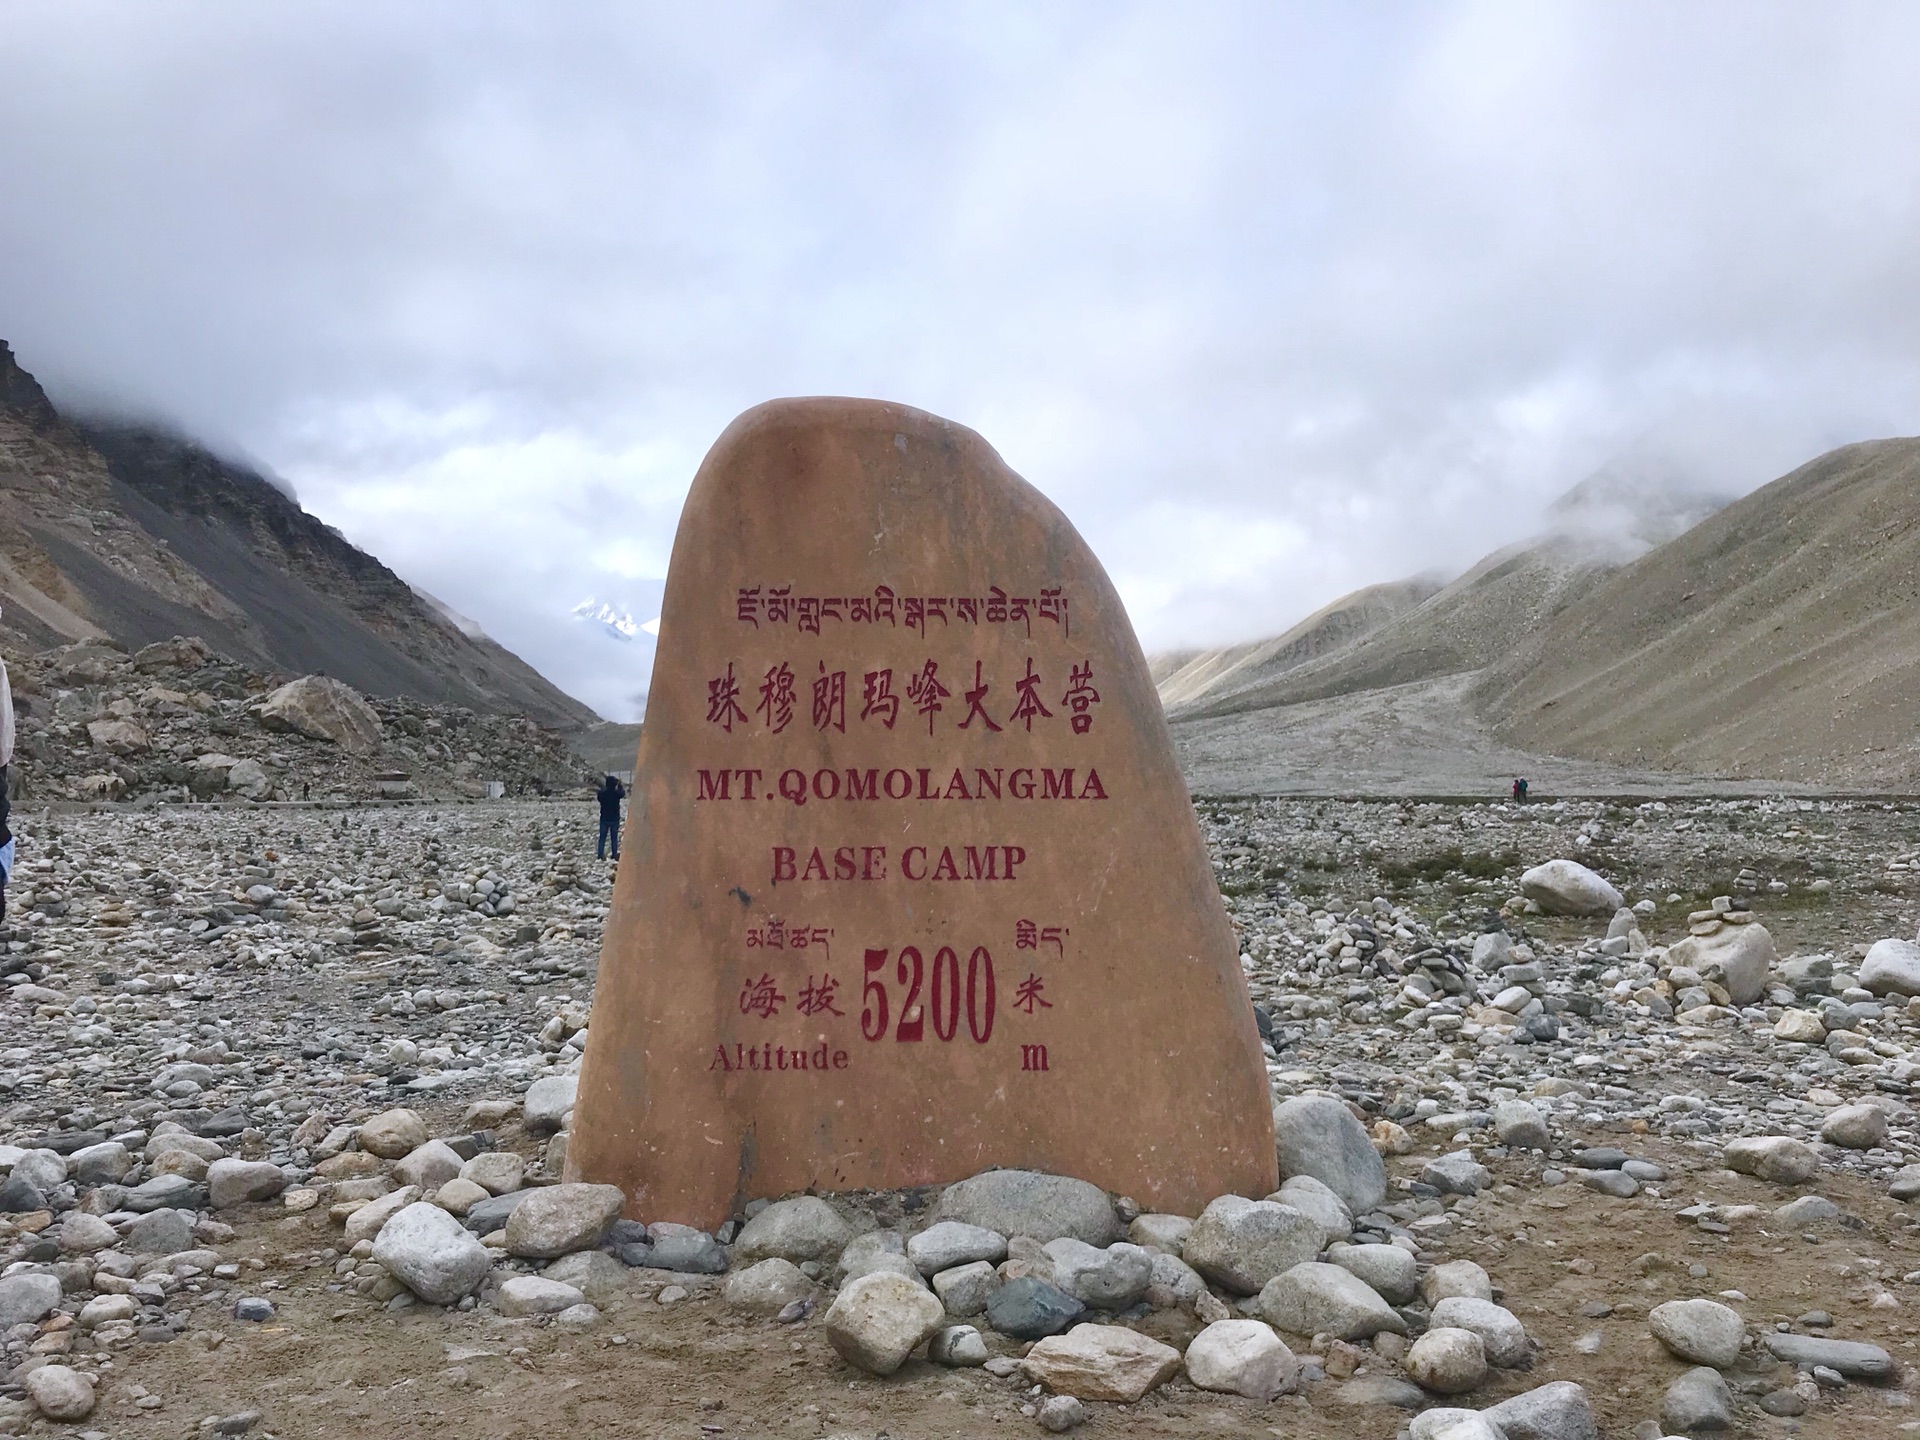 Tibet 5200 meters above sea level monument